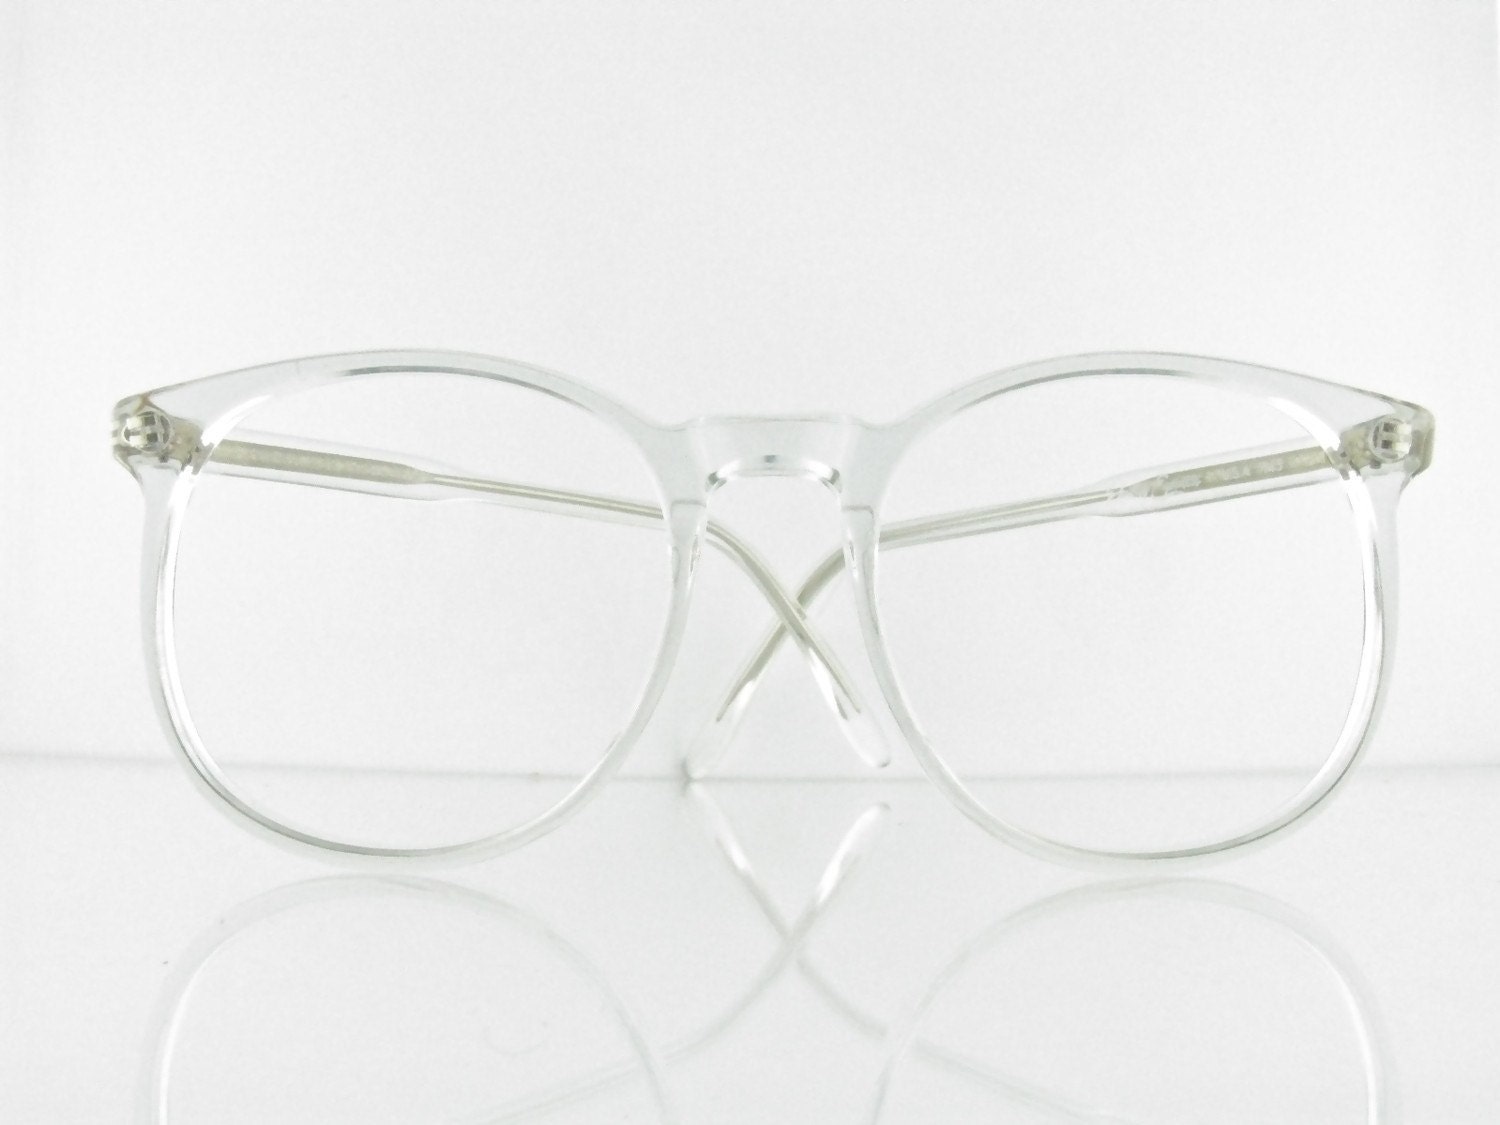 VTG 80's oversized Regency Eyewear eyeglasses frames Andy Warhol